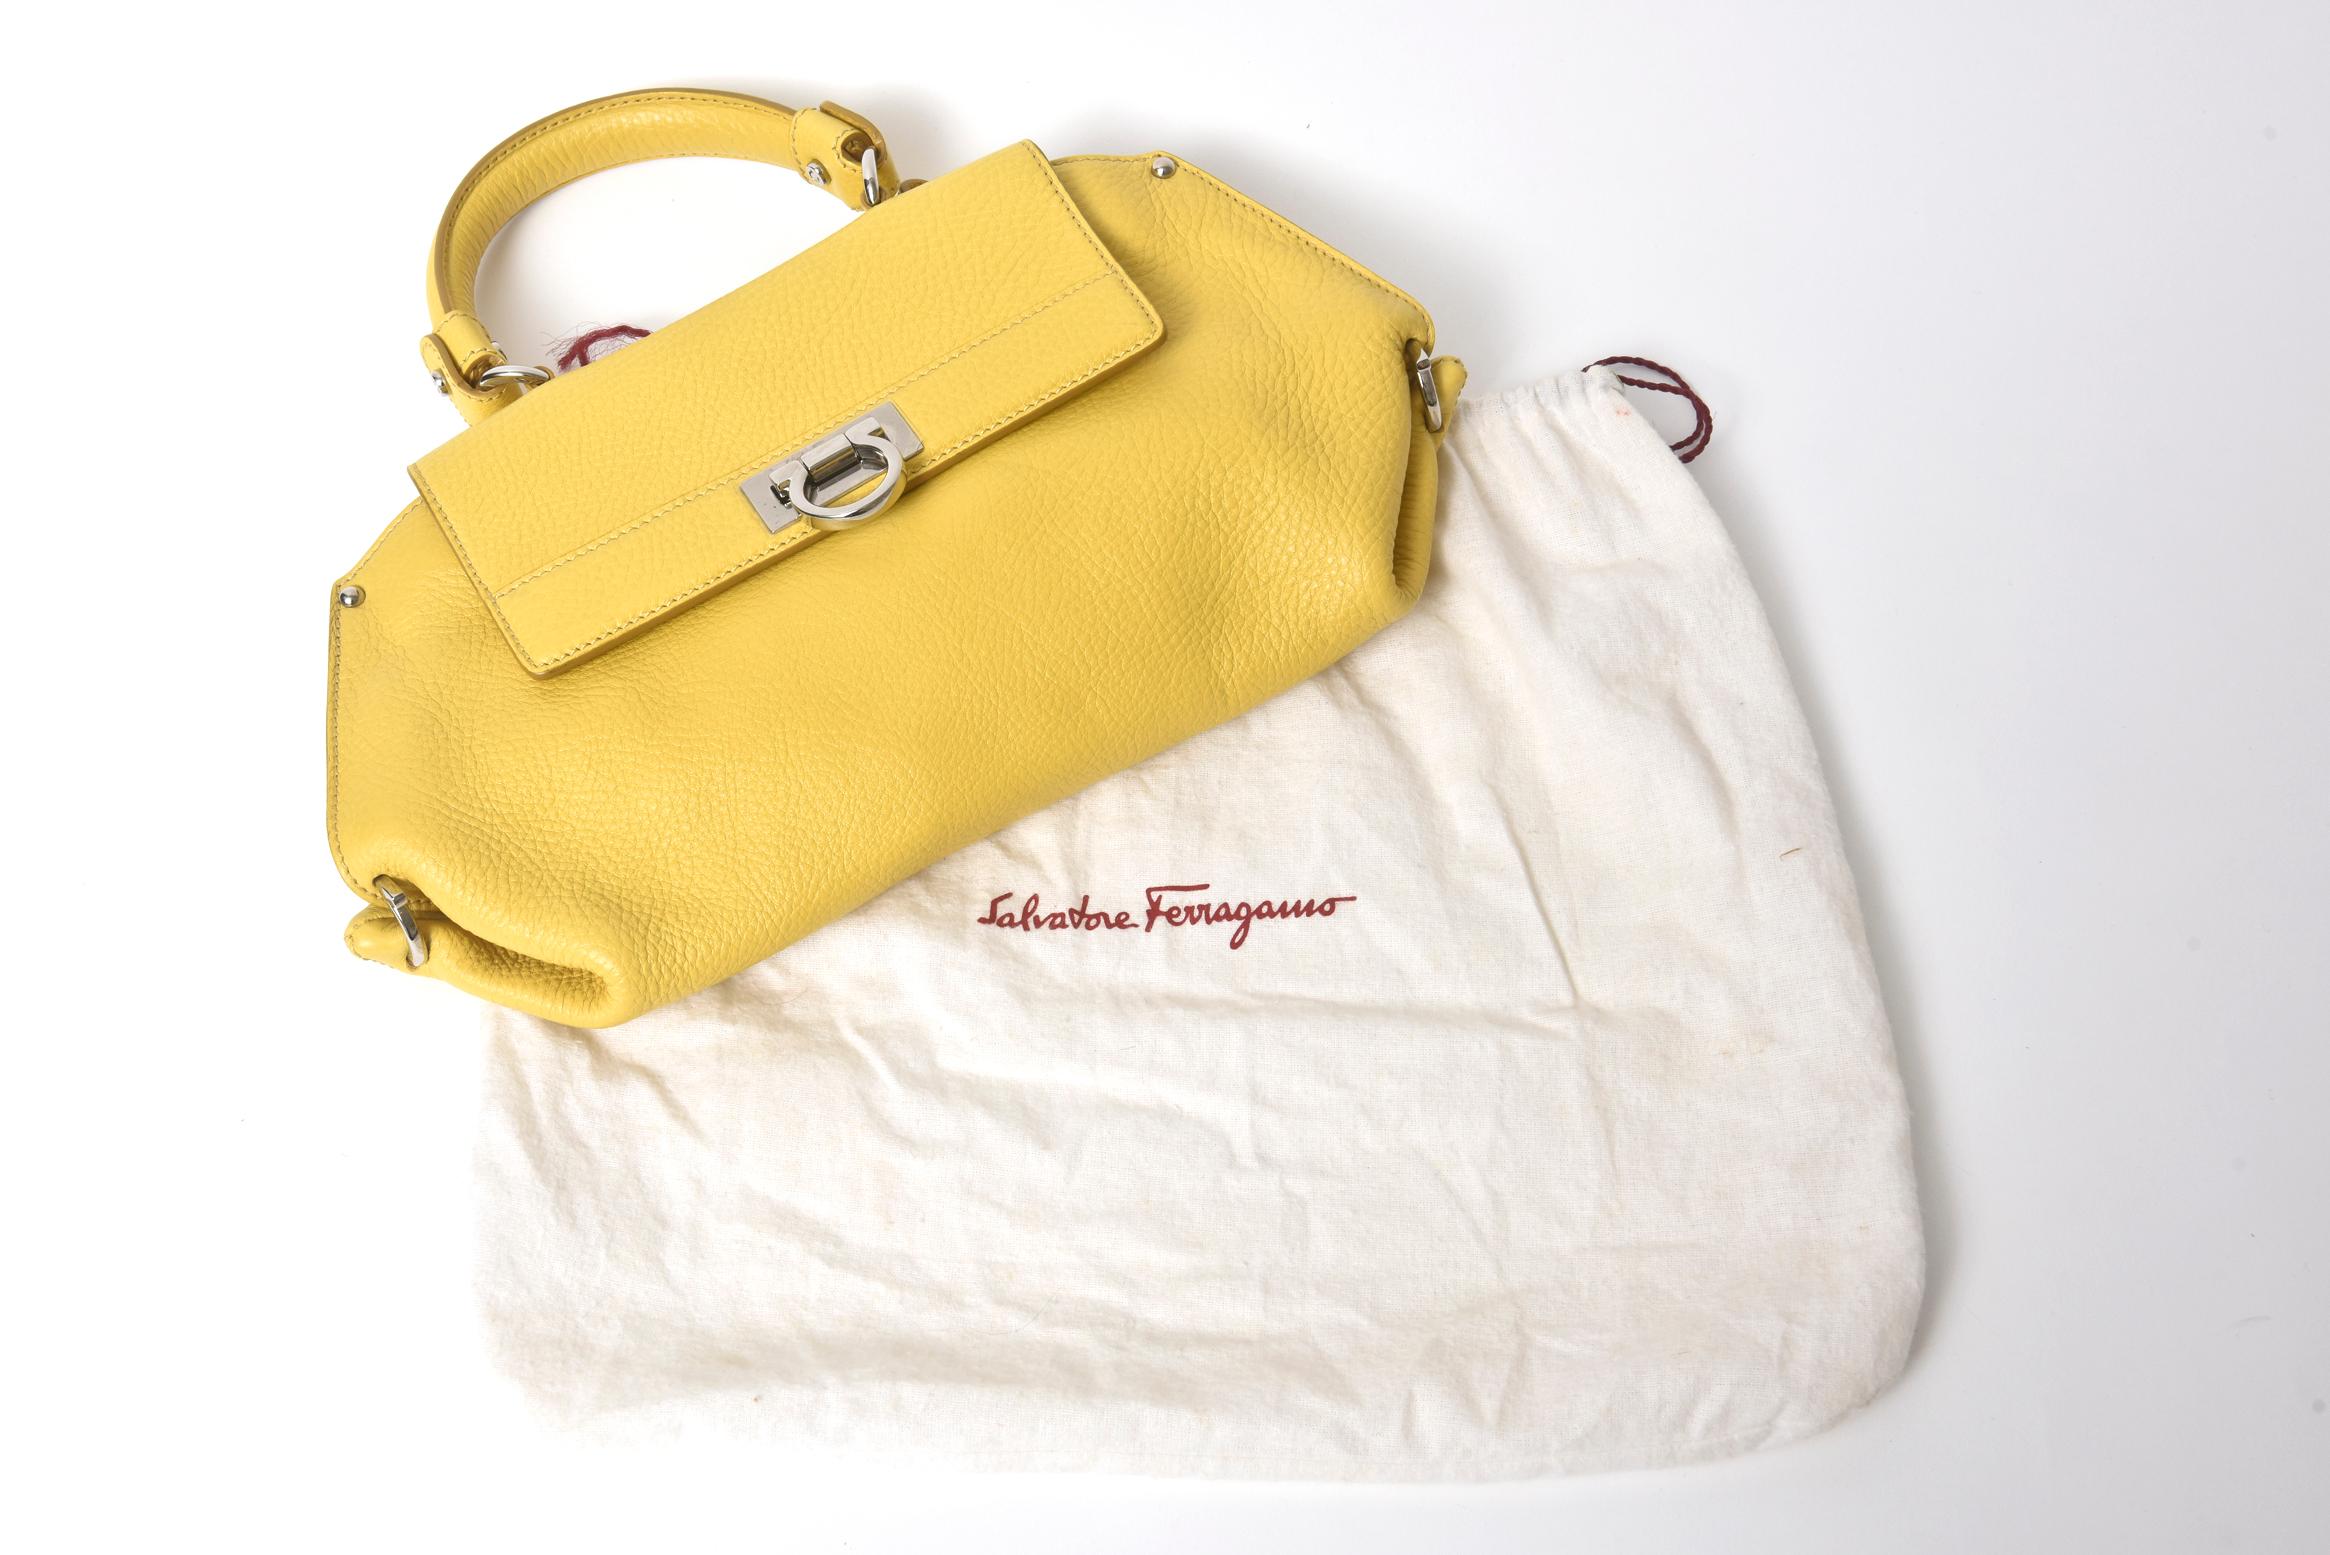 Salvatore Ferragamo Yellow Leather Sofia Satchel Purse Bag 1